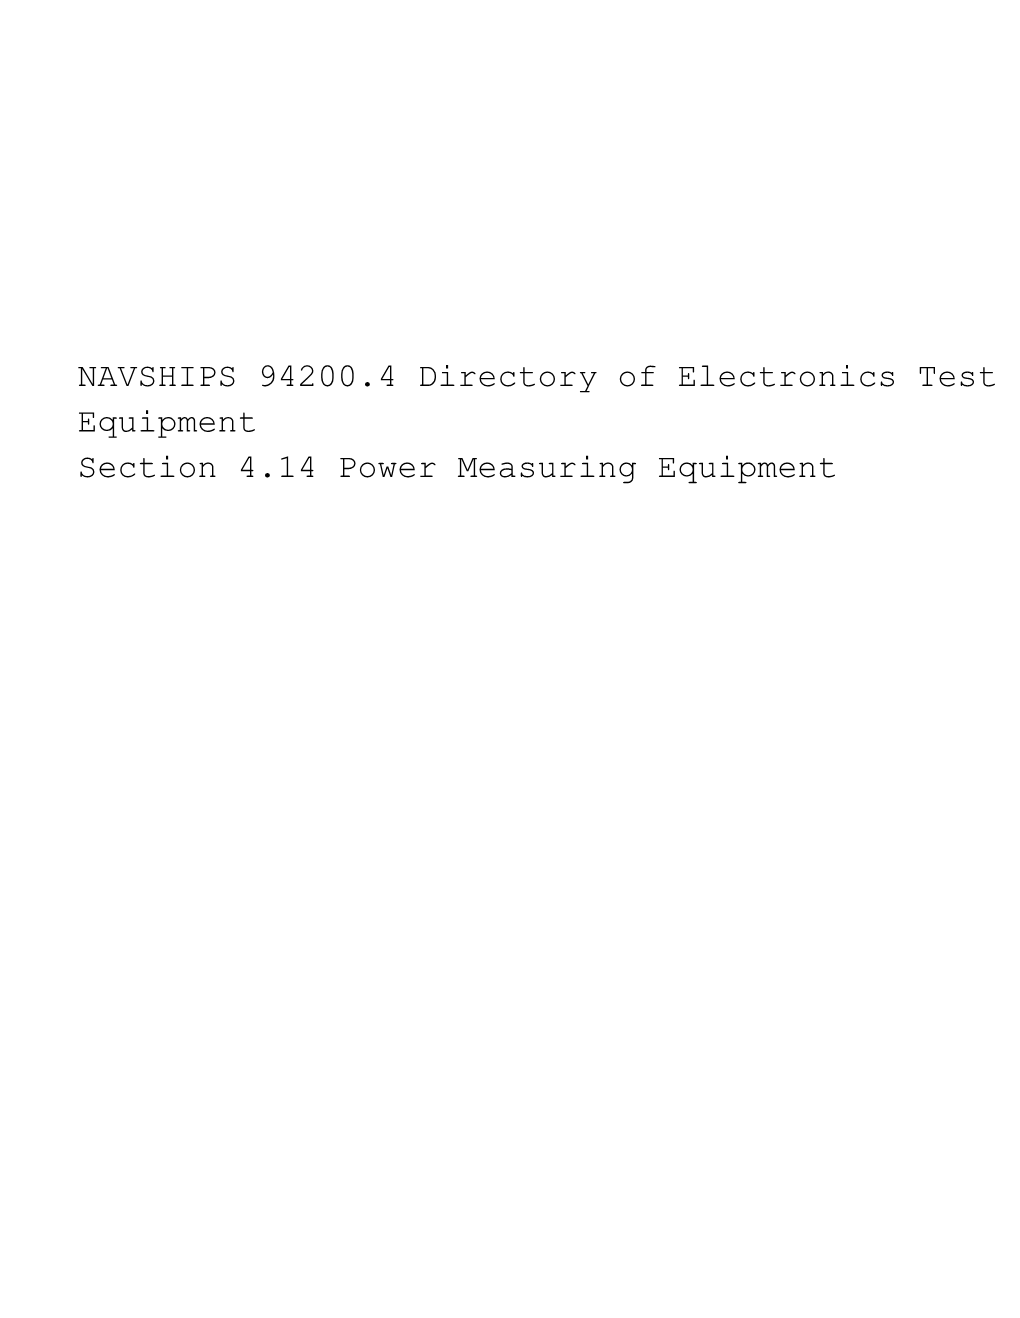 NAVSHIPS 94200.4 Directory of Electronics Test Equipment